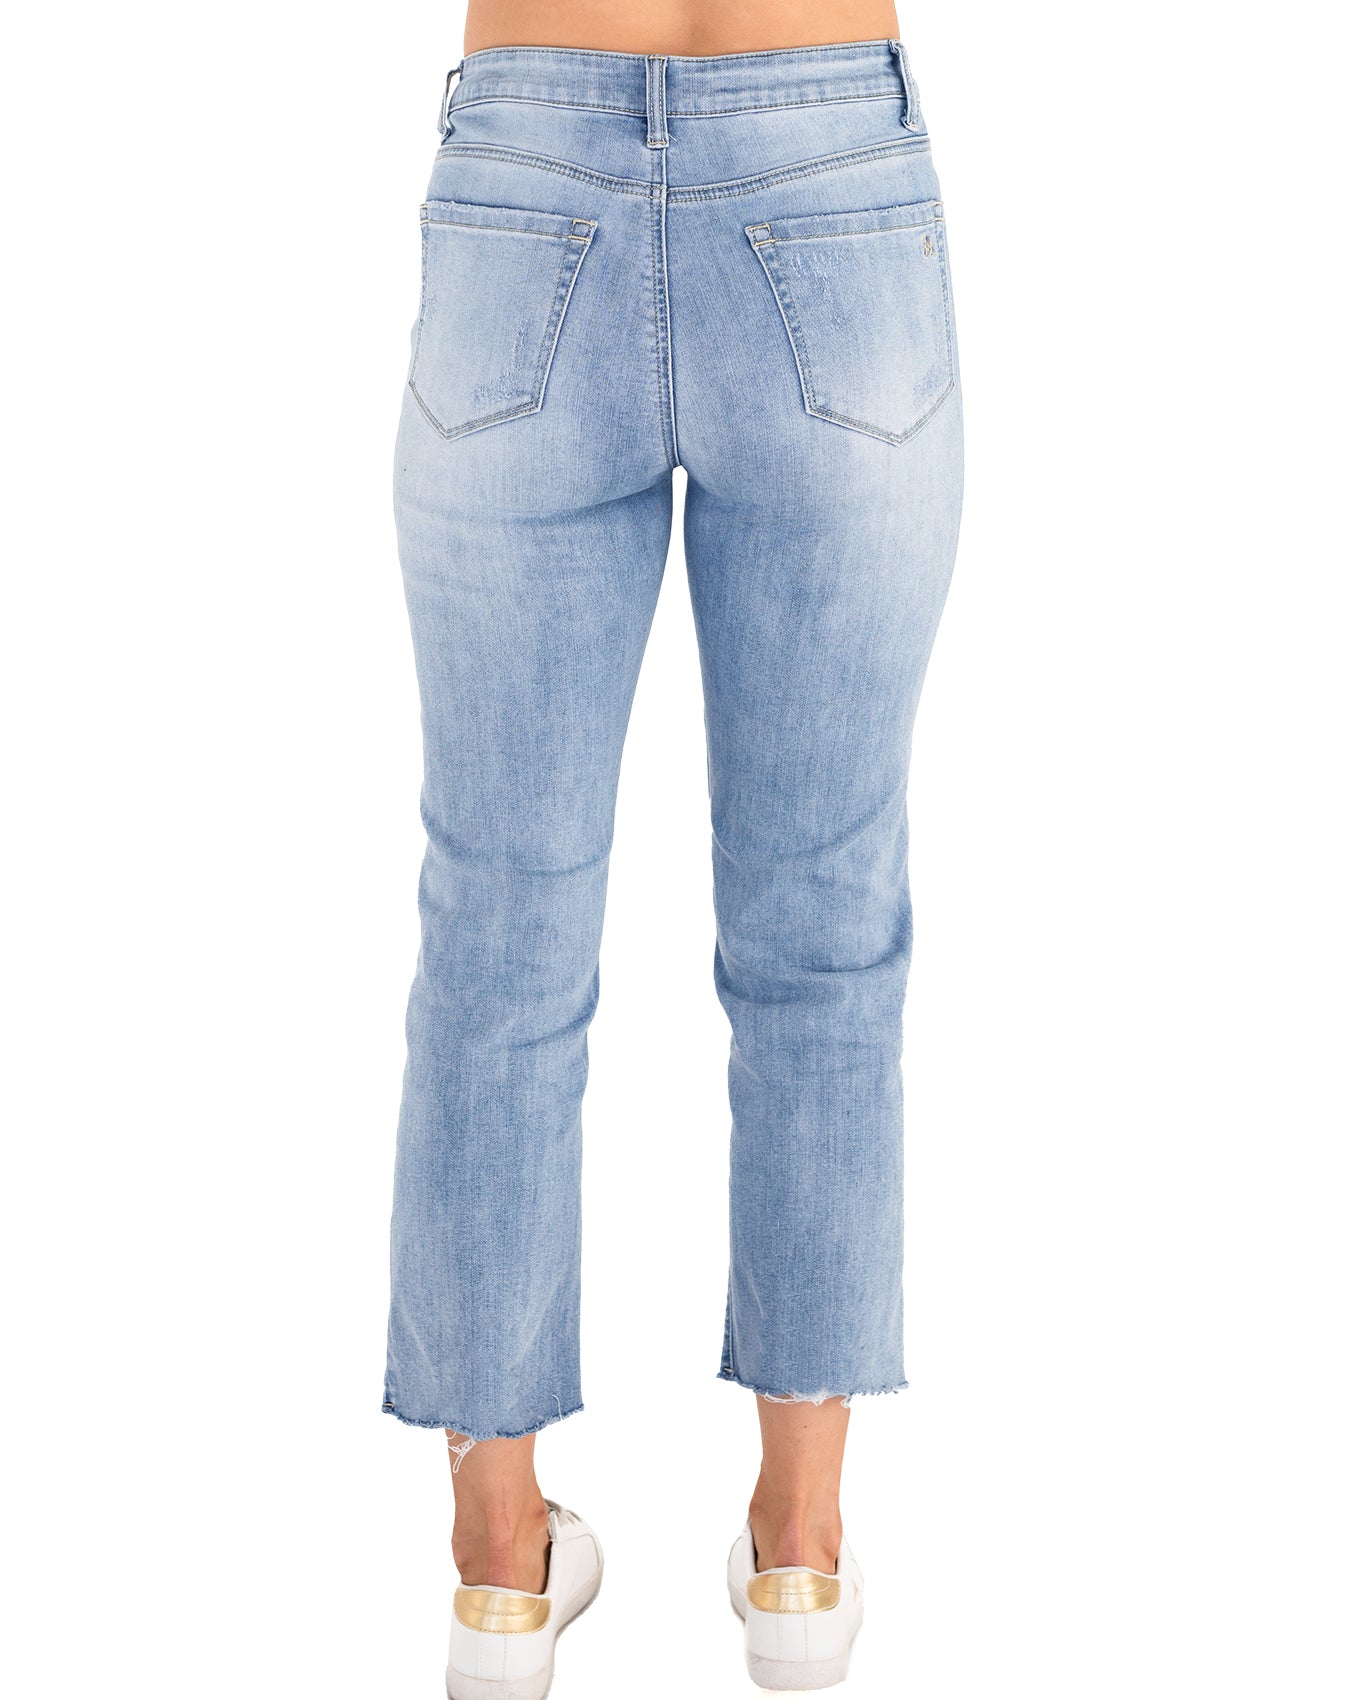  Women Capri Jeans Stretchy Straight Leg Denim Pants Size 14  Sky Blue